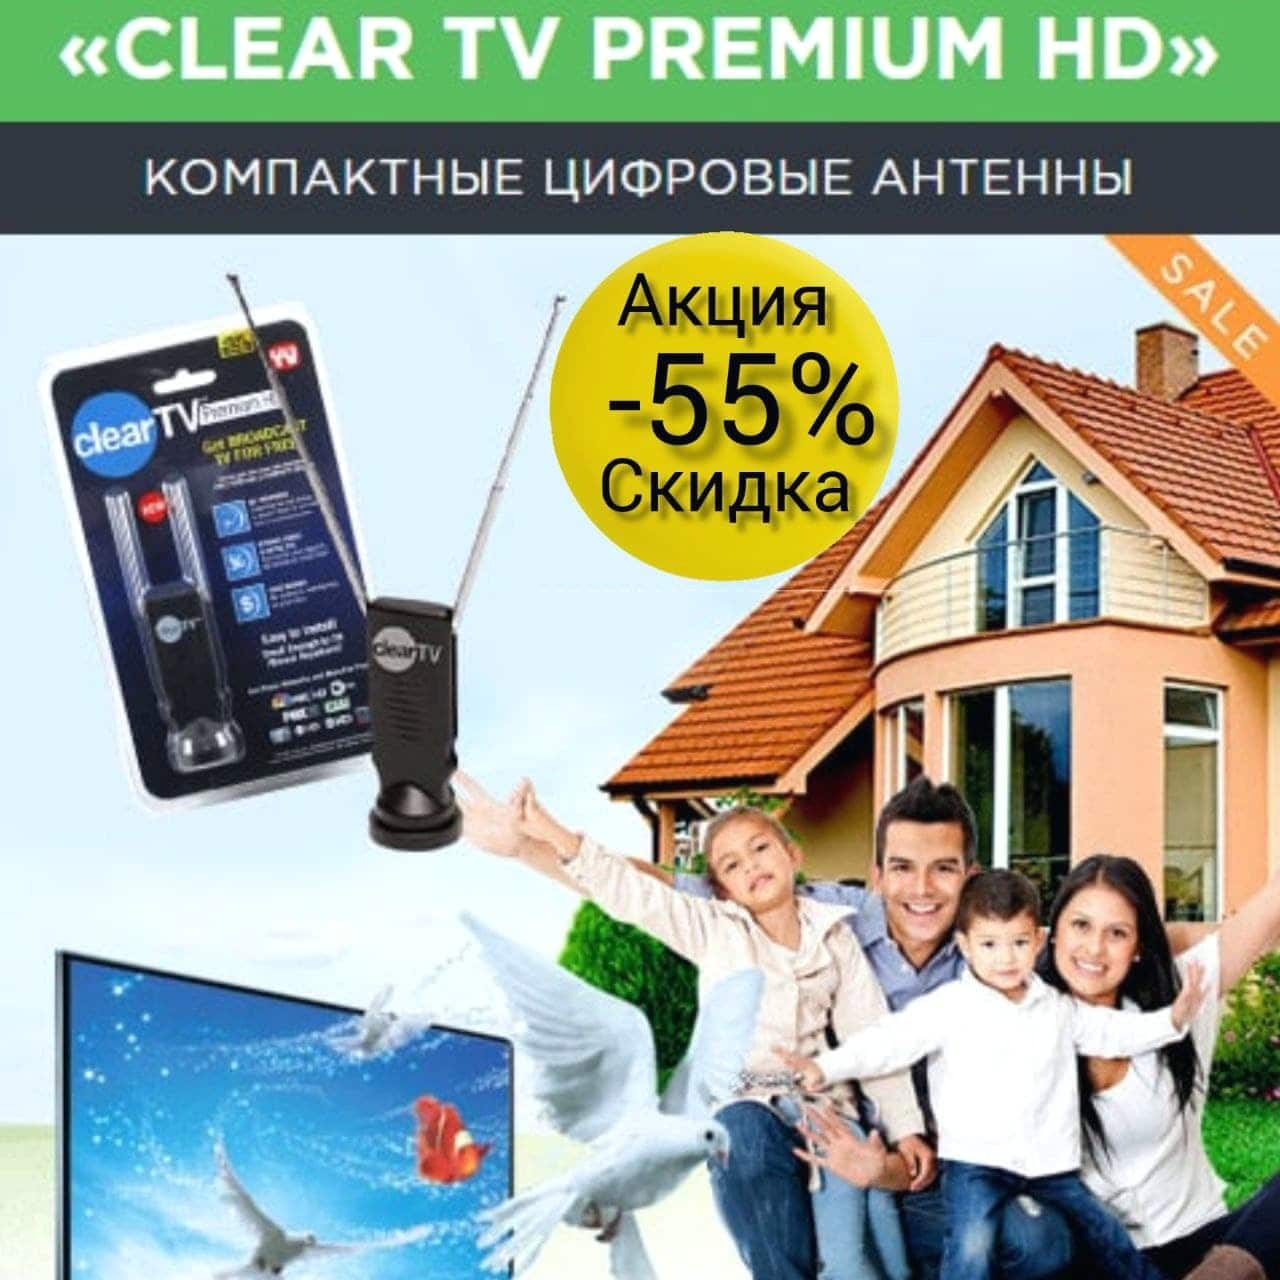 Clear TV Premium HD - купить лидер продаж среди антенн с приемом цифровых телеканалов